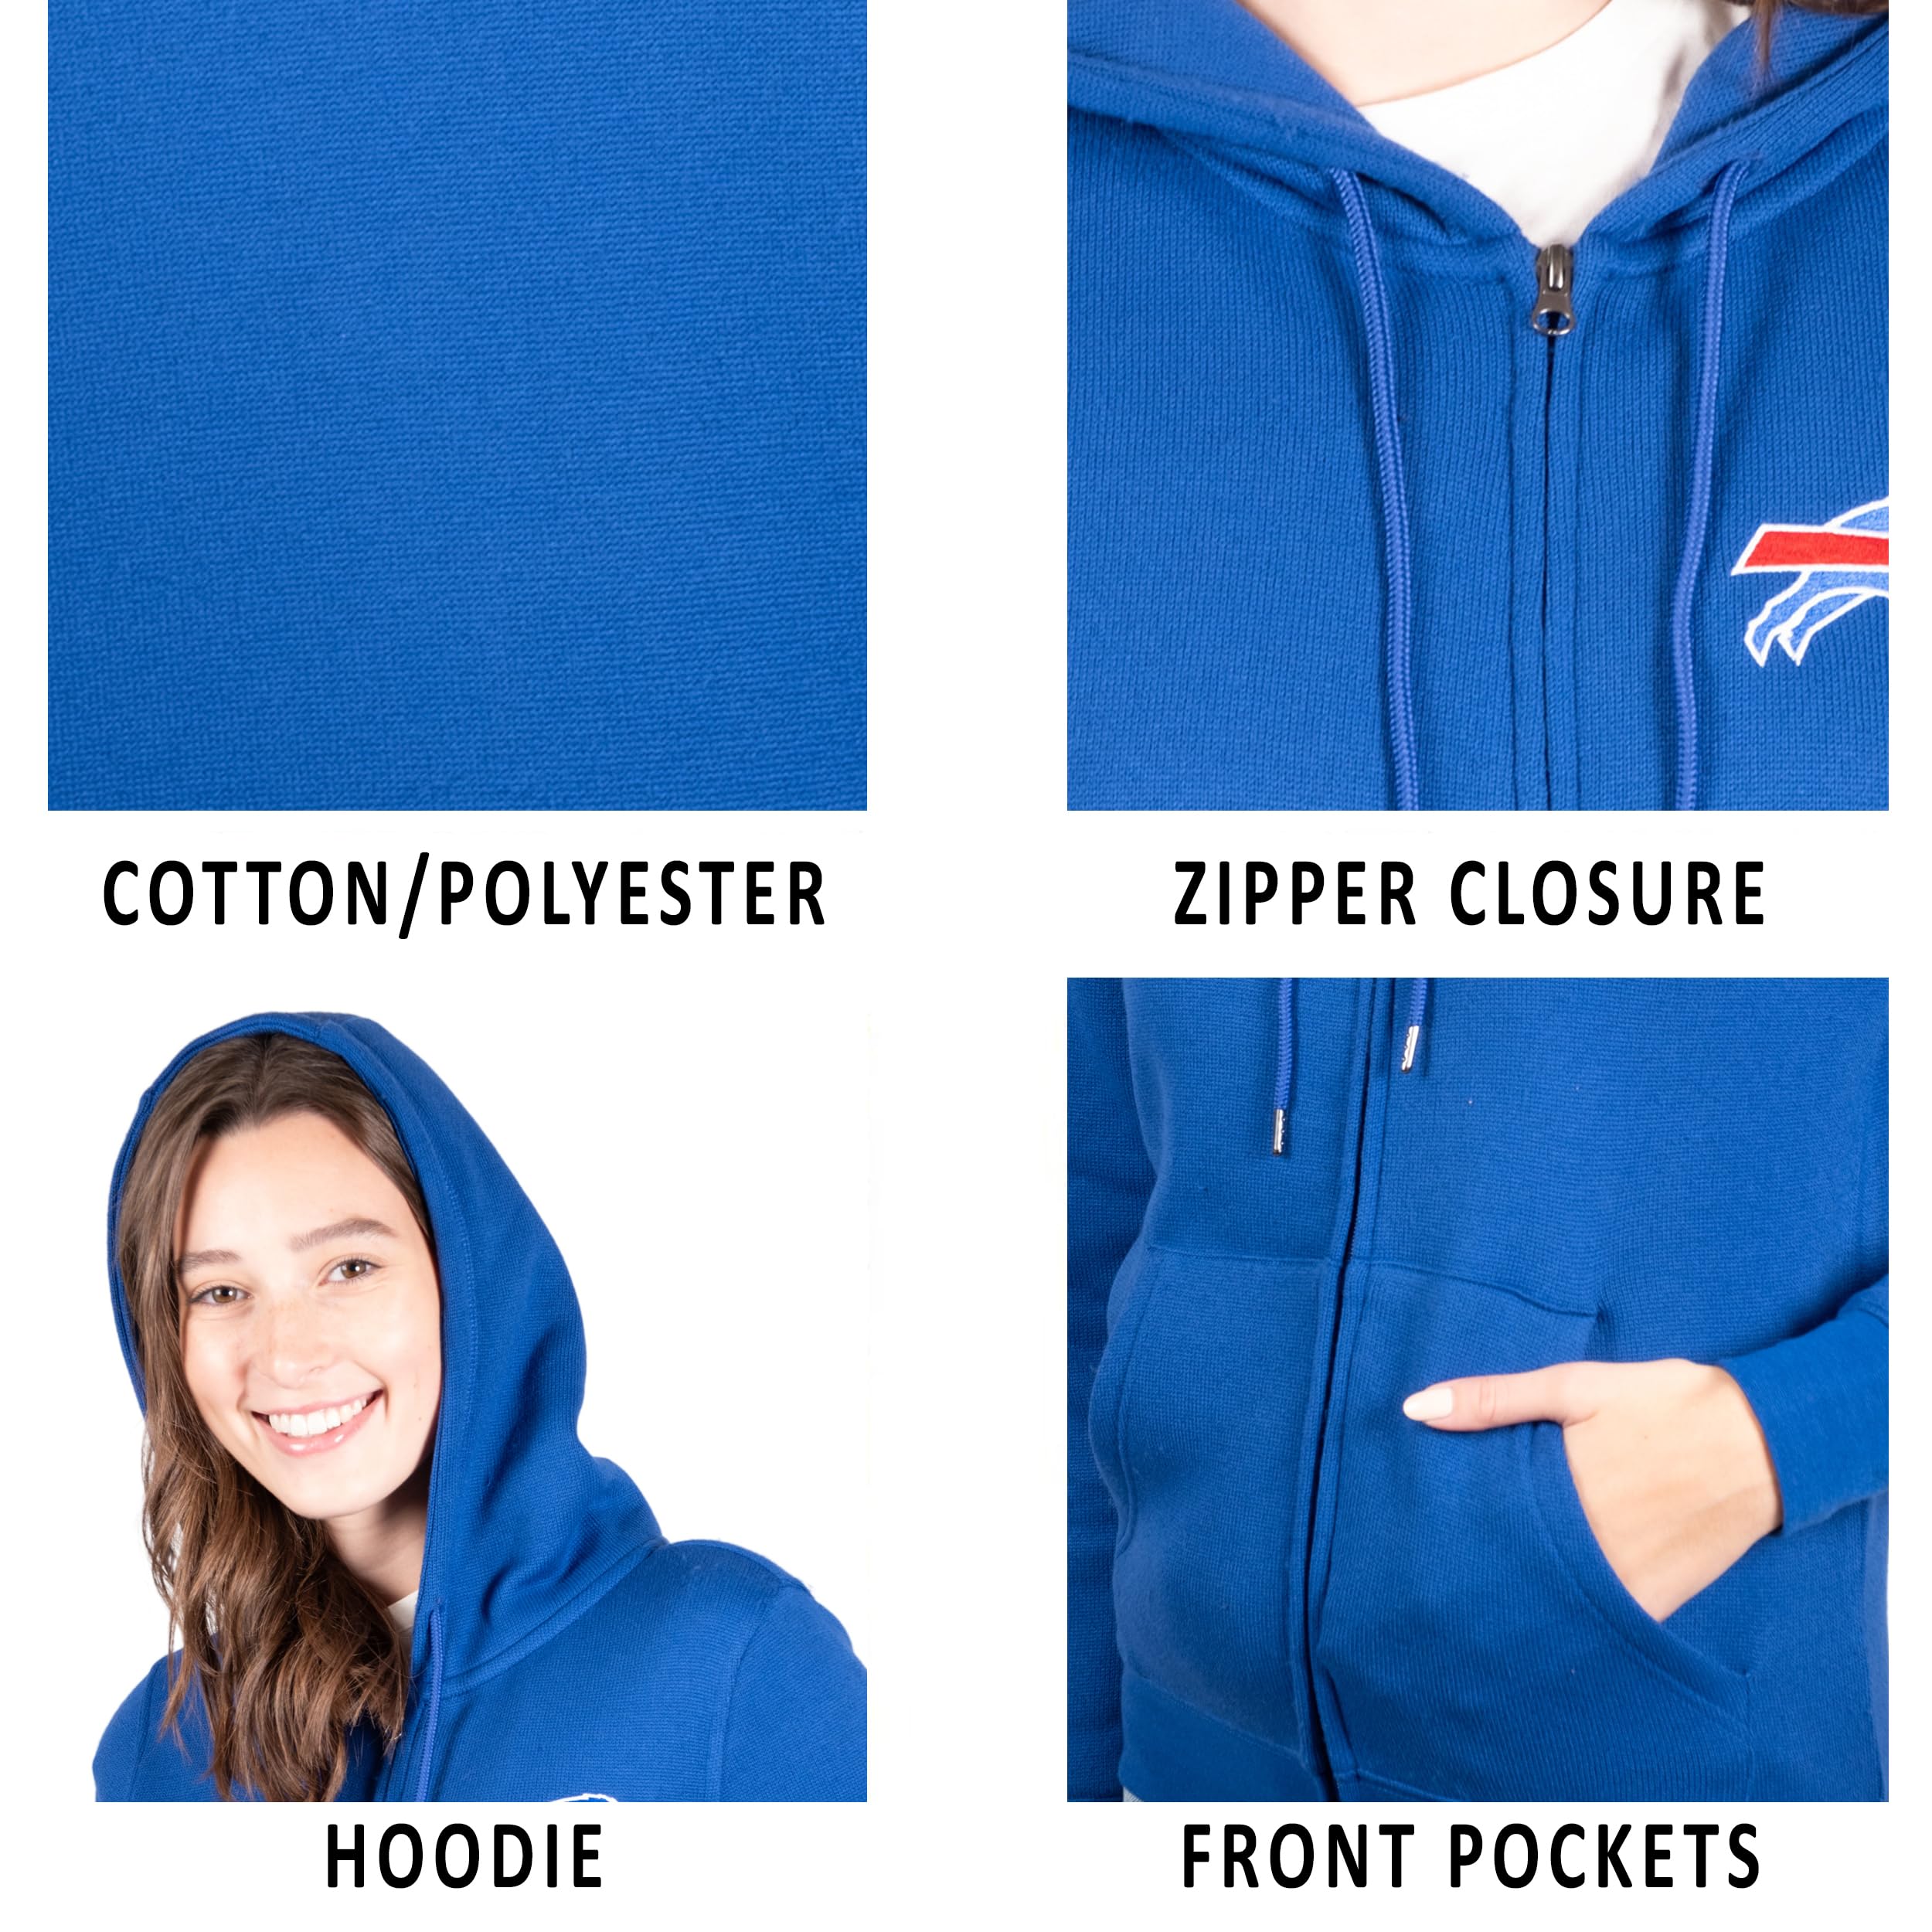 Ultra Game NFL Denver Broncos Womens Full Zip Soft Marl Knit Hoodie Sweatshirt Jacket|Denver Broncos